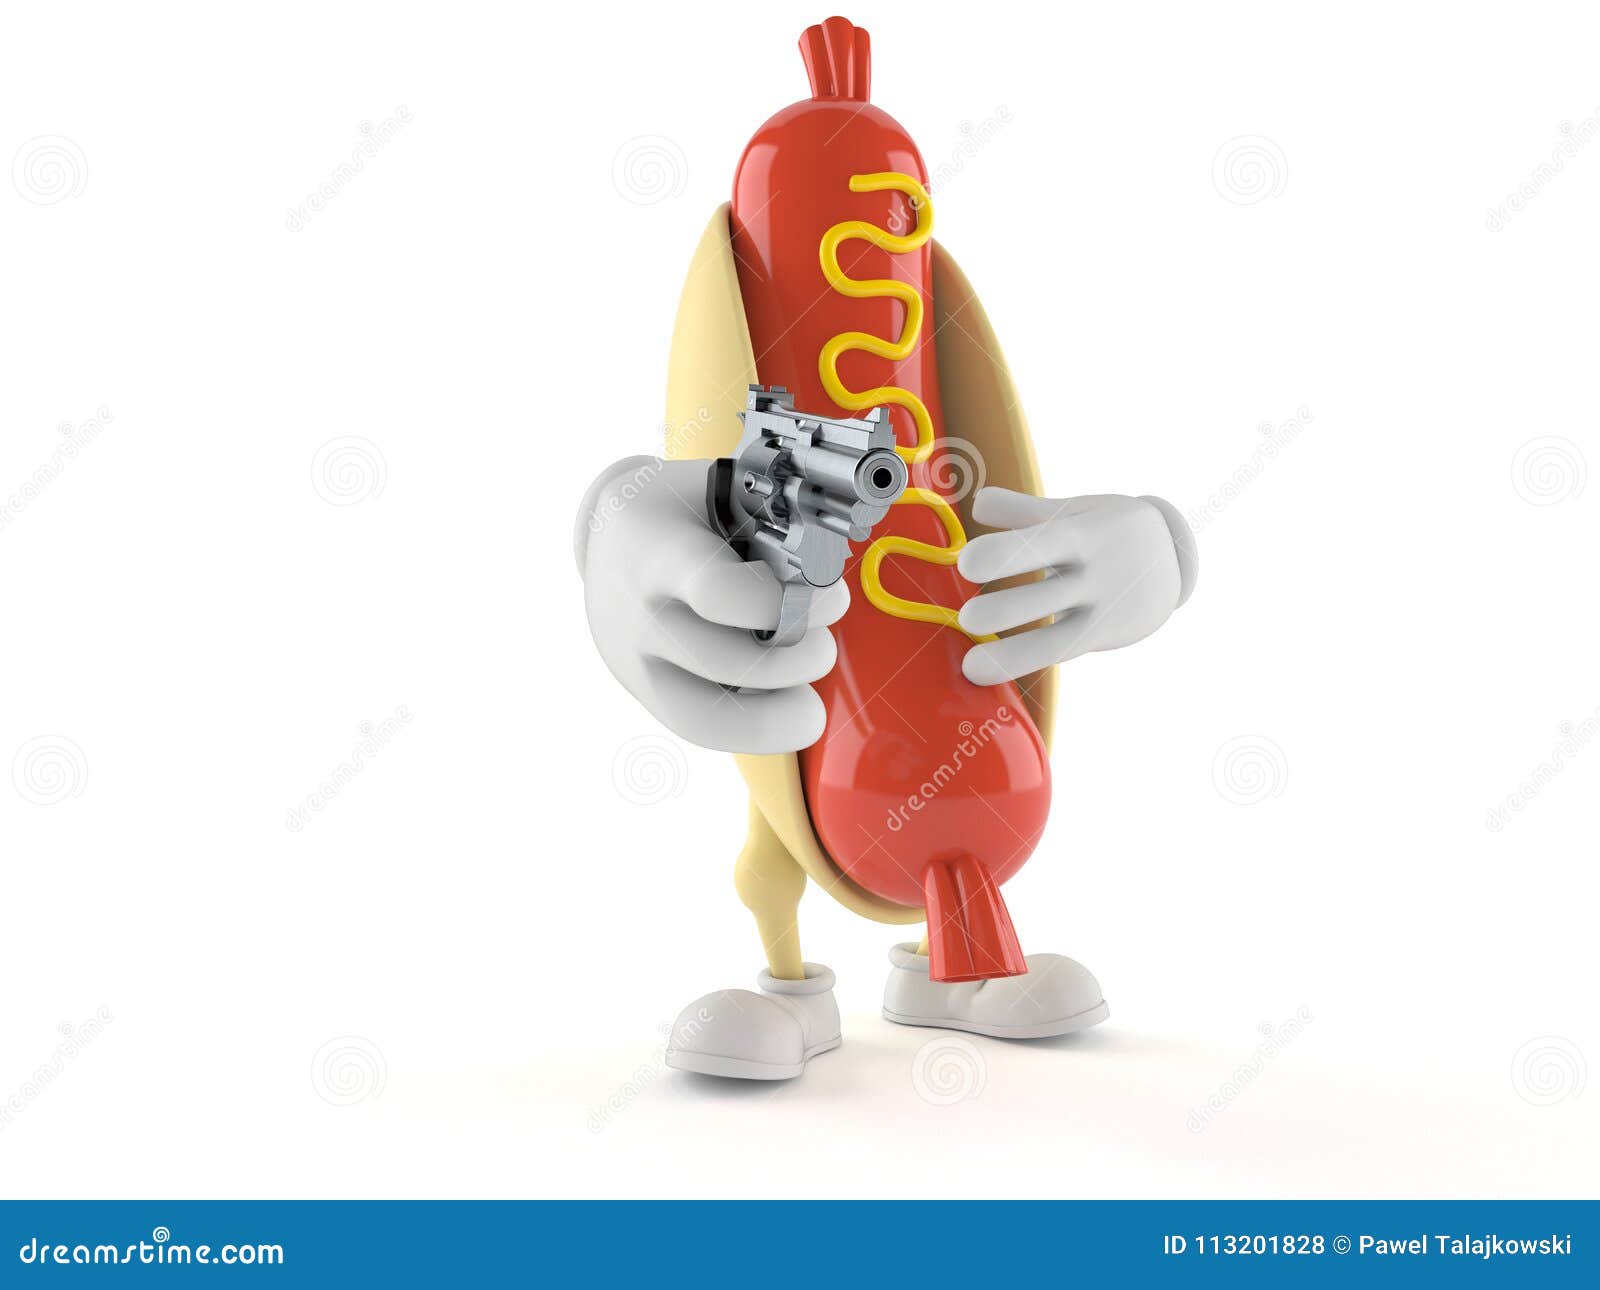 Hot Dog Character Aiming a Gun Stock Illustration - Illustration of  fastfood, food: 113201828